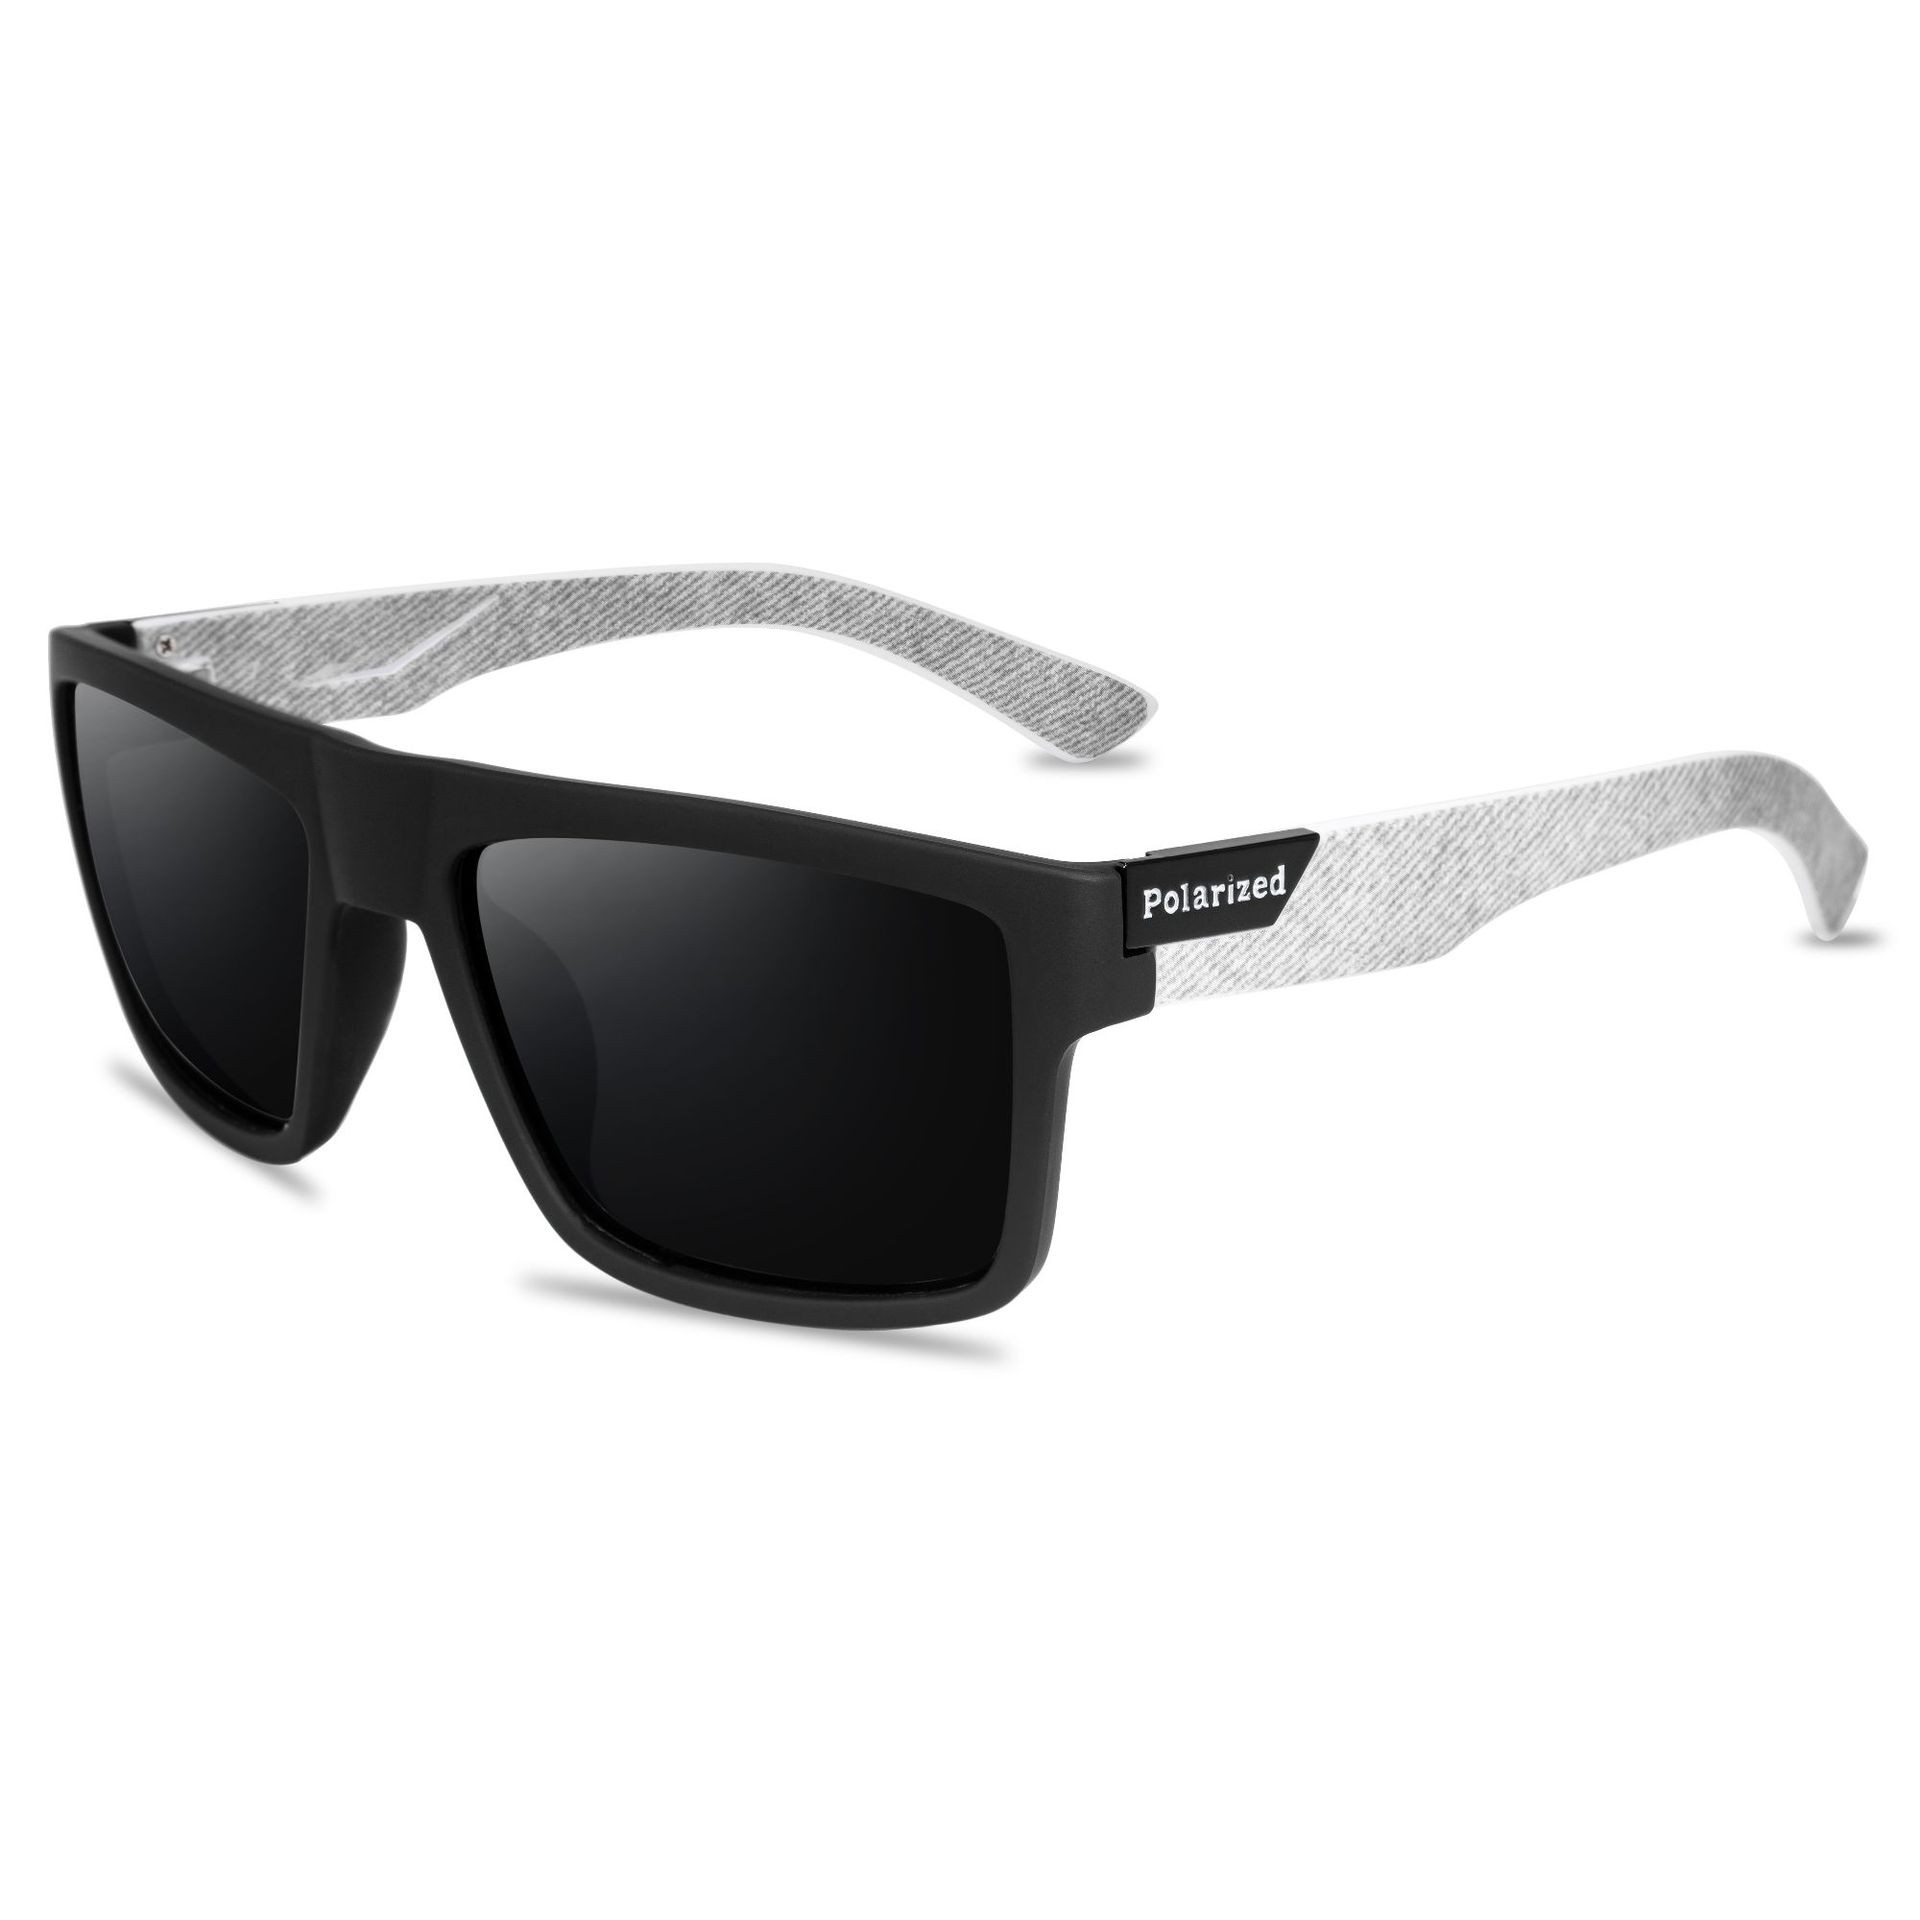 2021 fashion frame sun glasses cycling sports driver polarized sunglasses for men eyewear